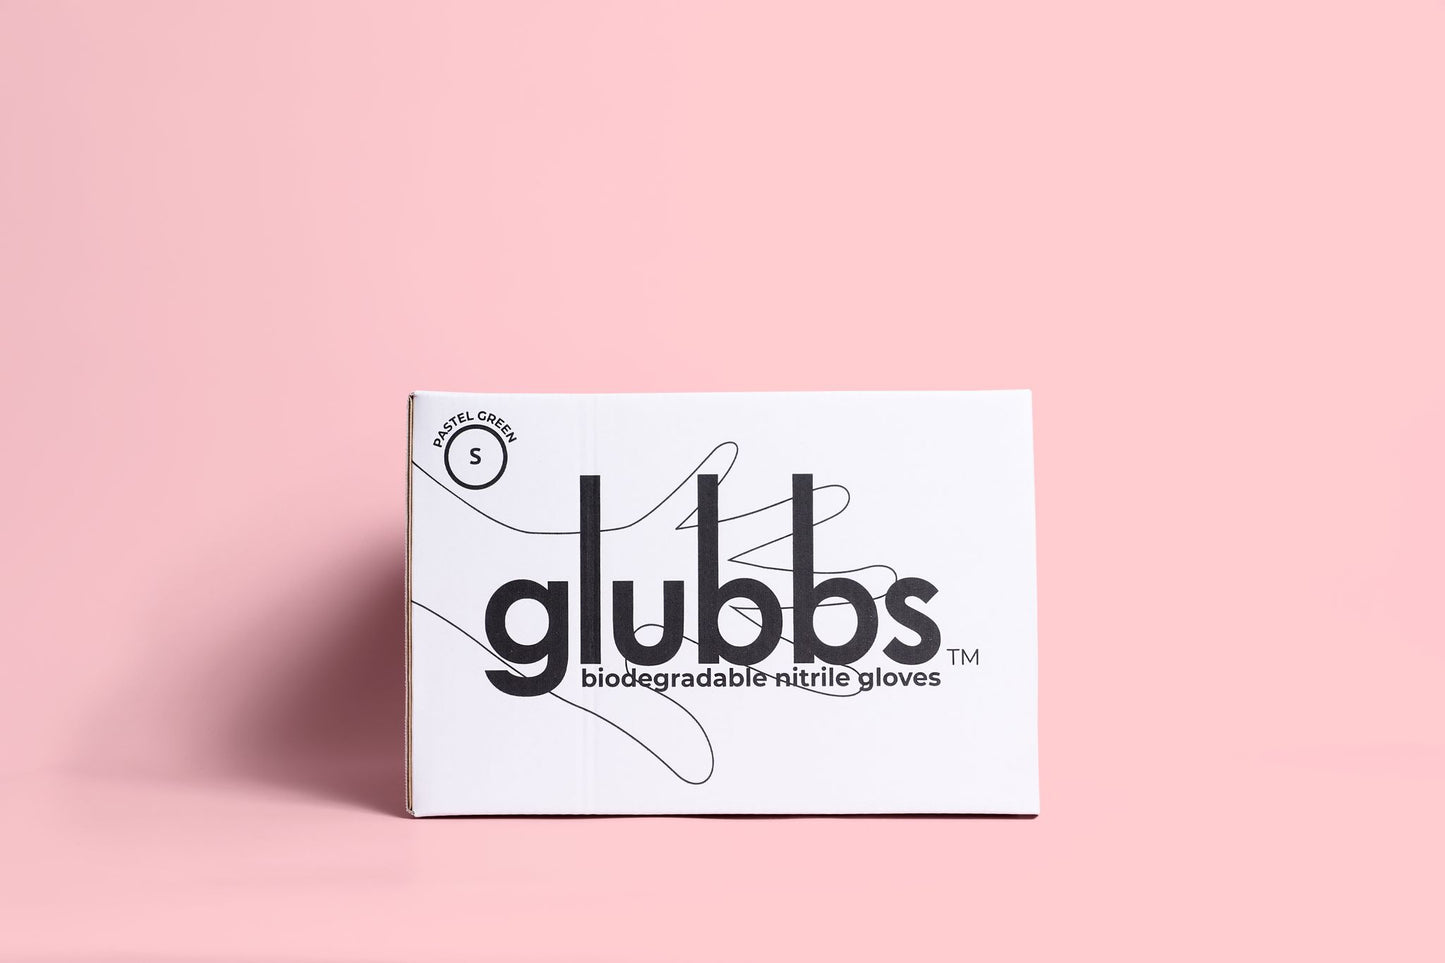 Glubbs - Biodegradable Nitrile Gloves Carton (10 x glove boxes)